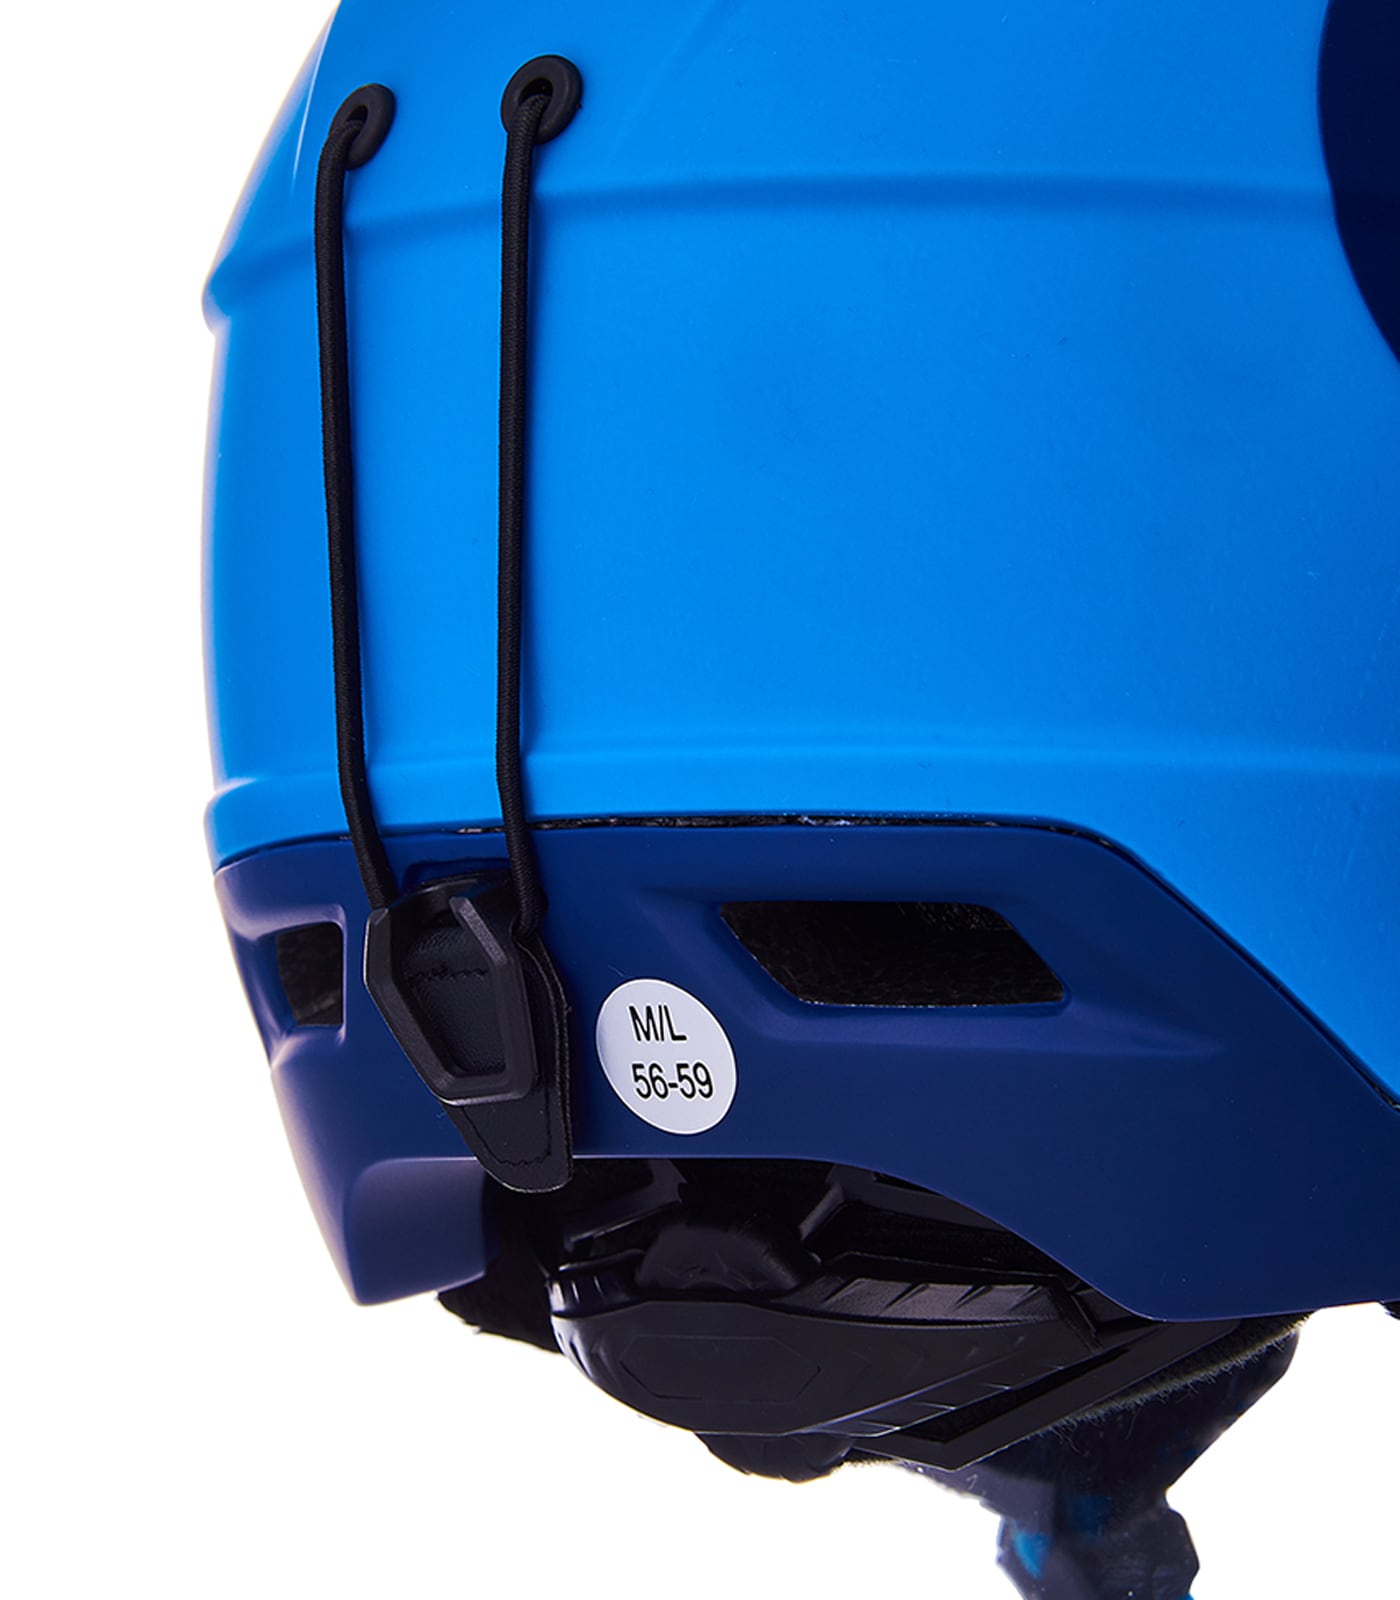 Double ski helmet, blue matt/dark blue, big logo